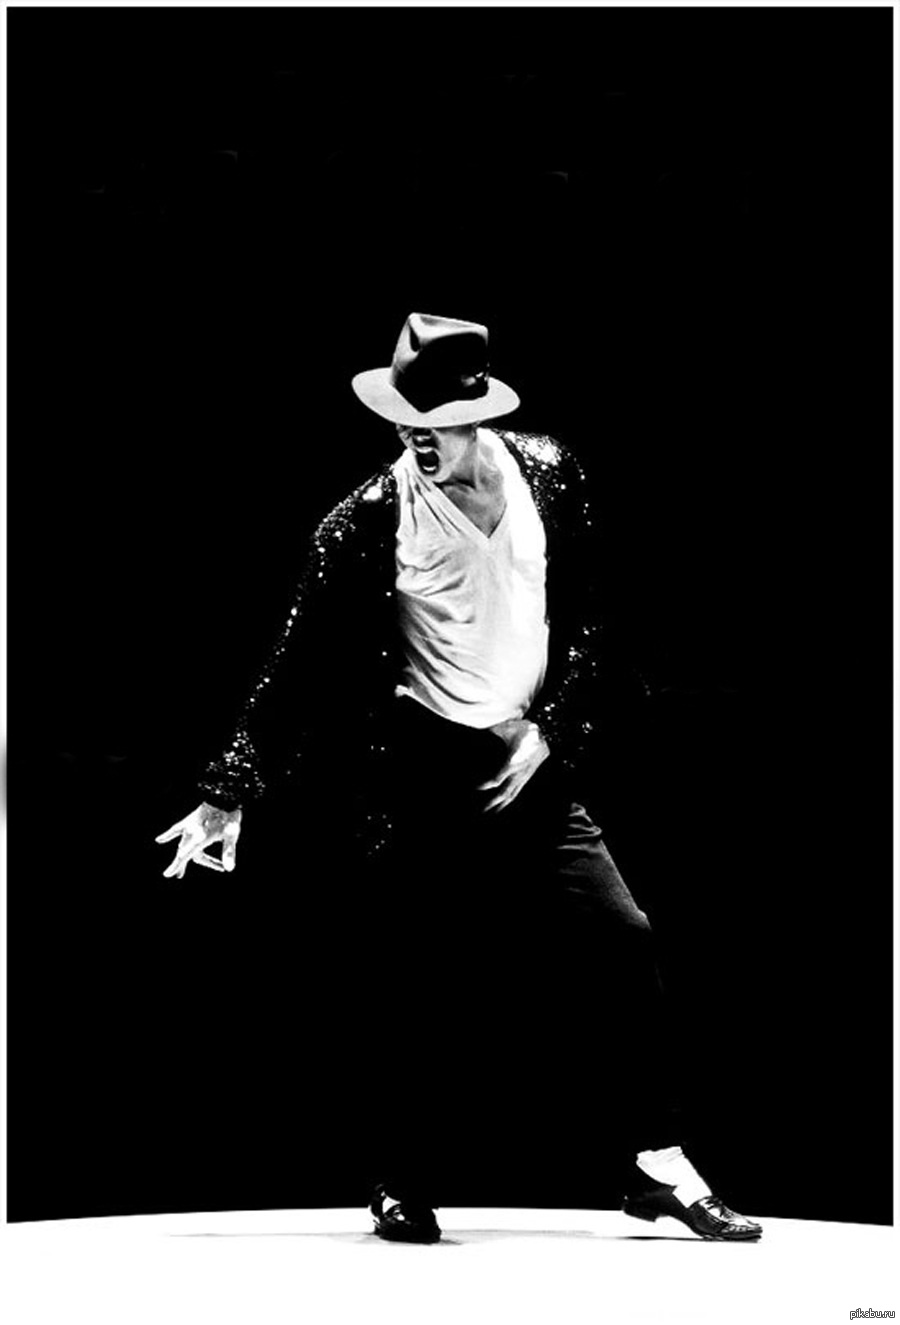 Michael jackson dancing. Джексон танцует.